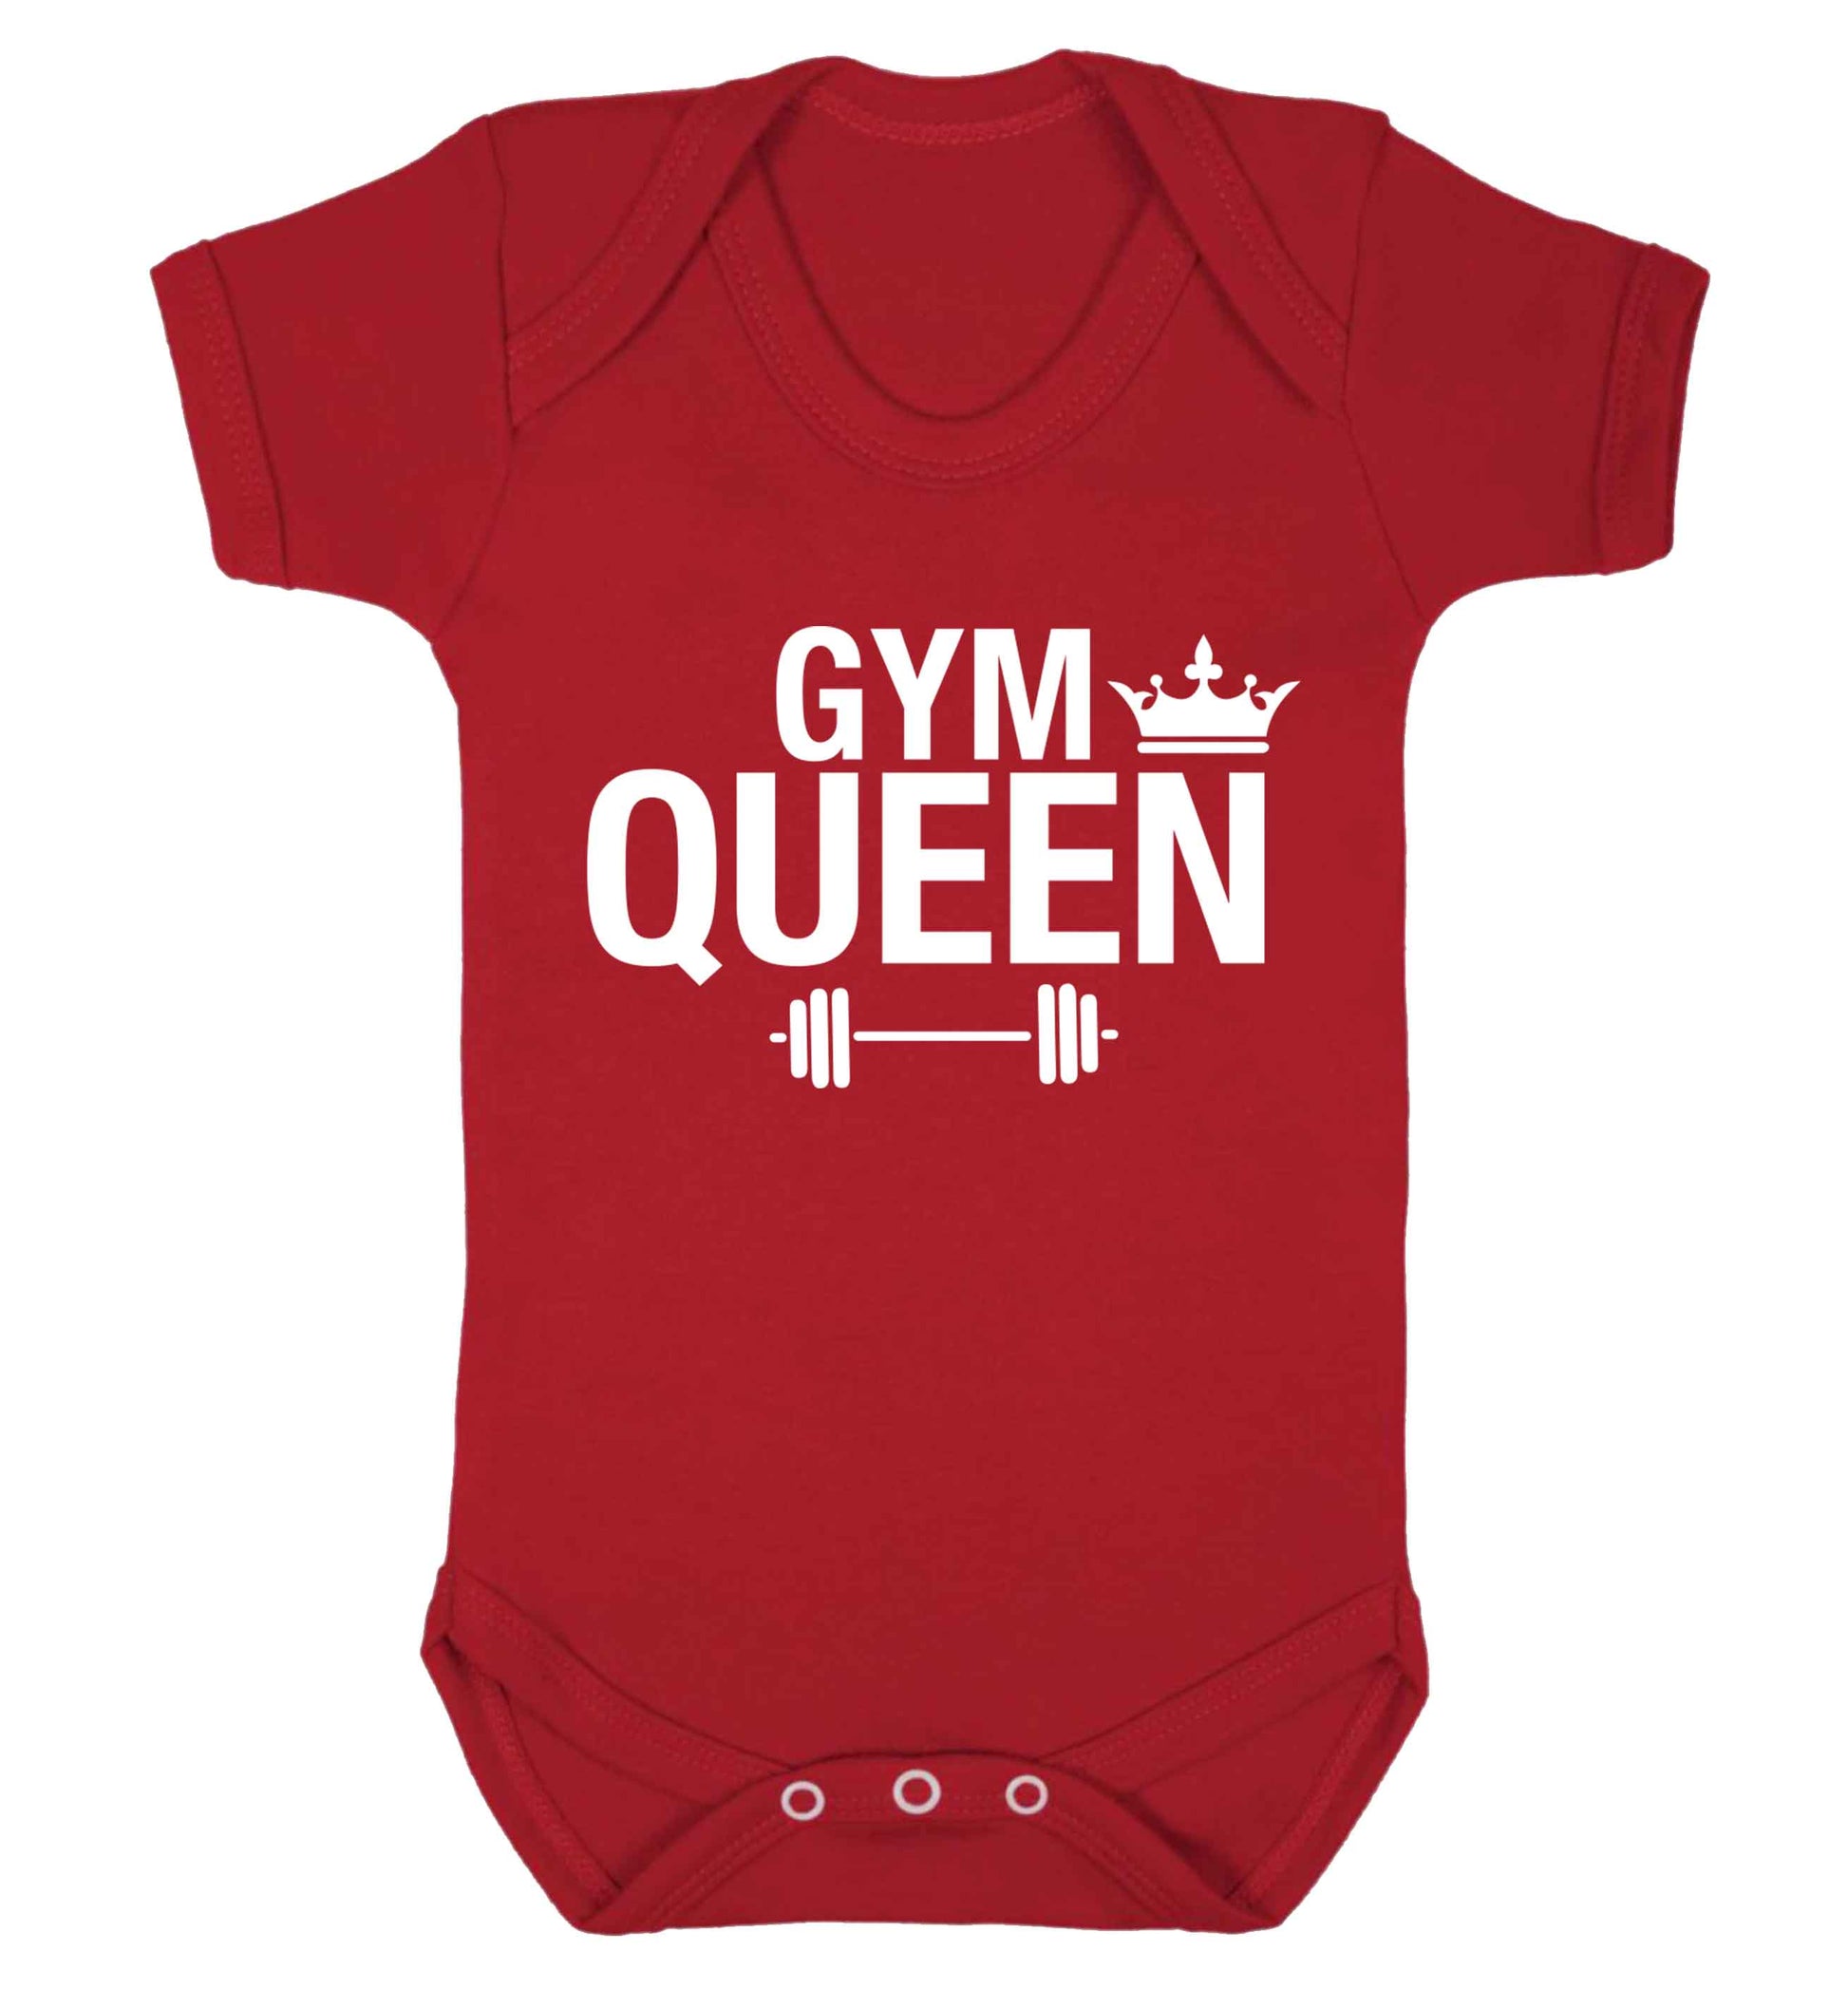 Gym queen Baby Vest red 18-24 months